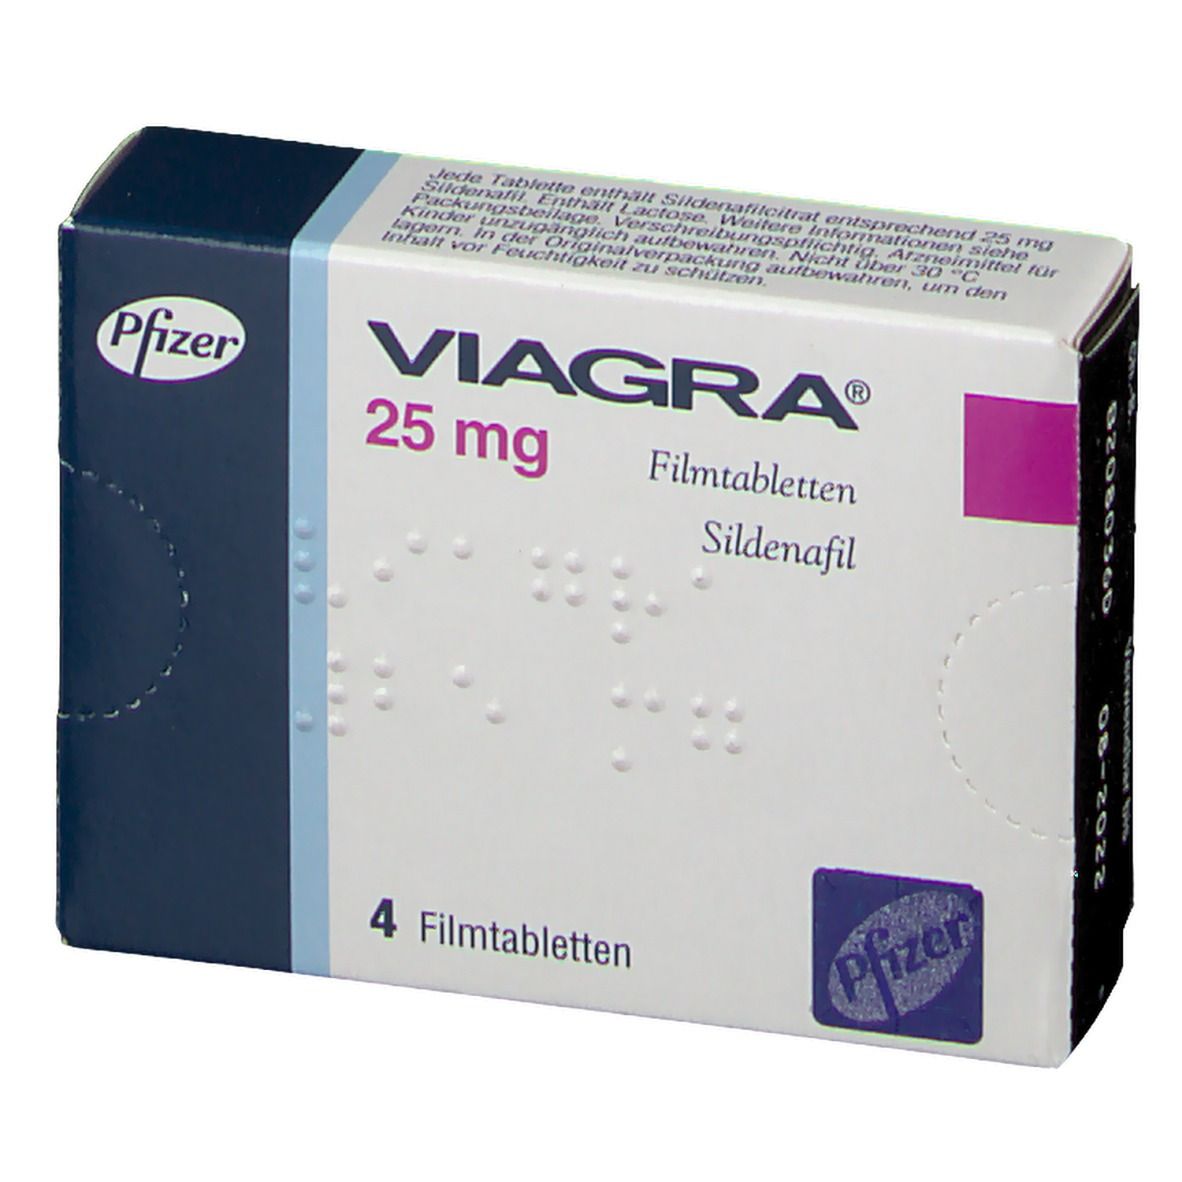 Viagra Tabletten Verpackung 25mg